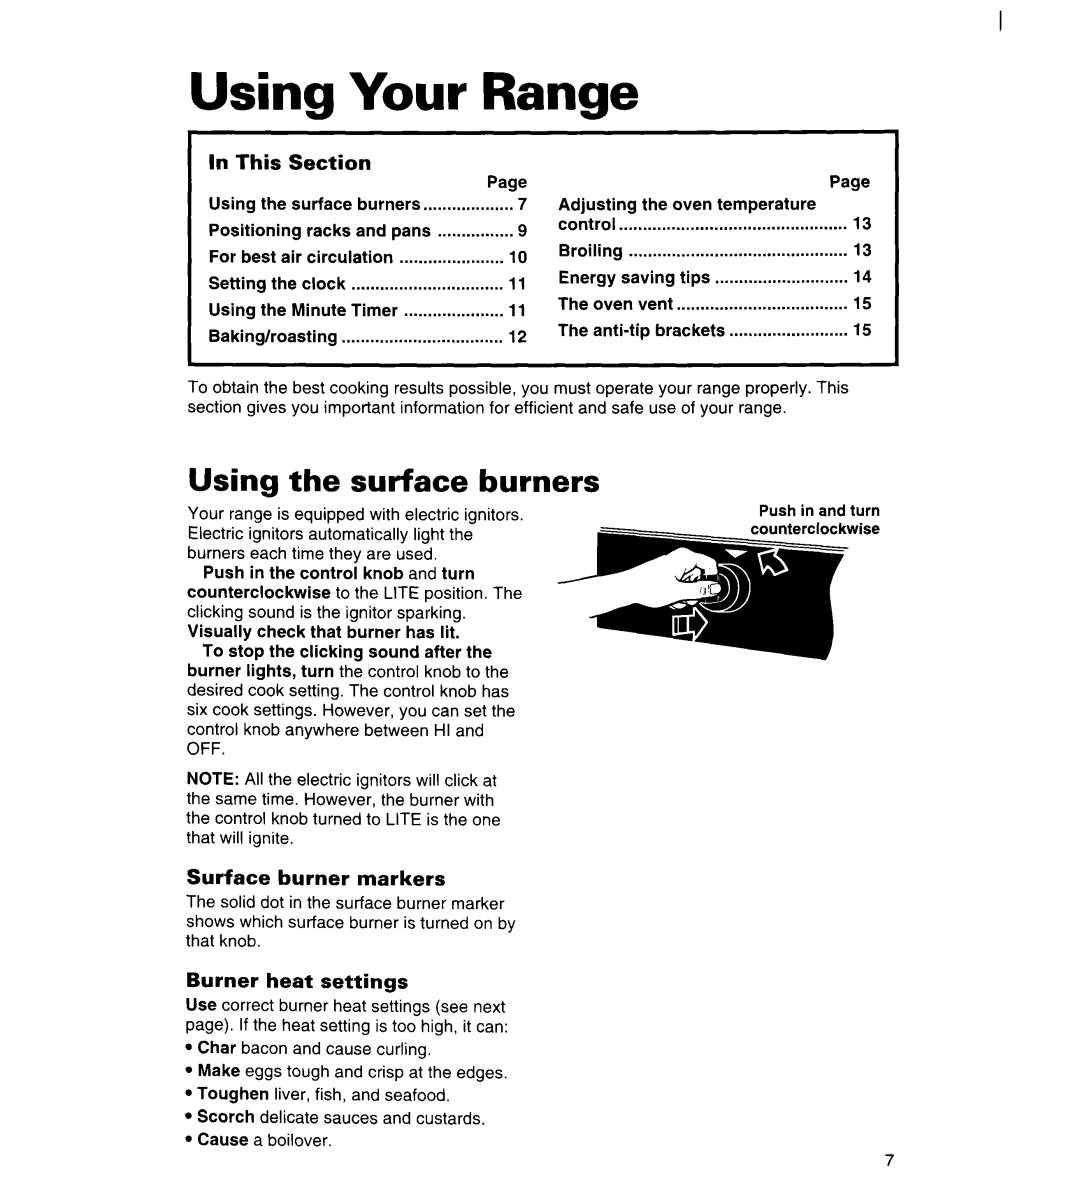 Estate TGRGIWZB manual Your, Range, Using the surface burners 